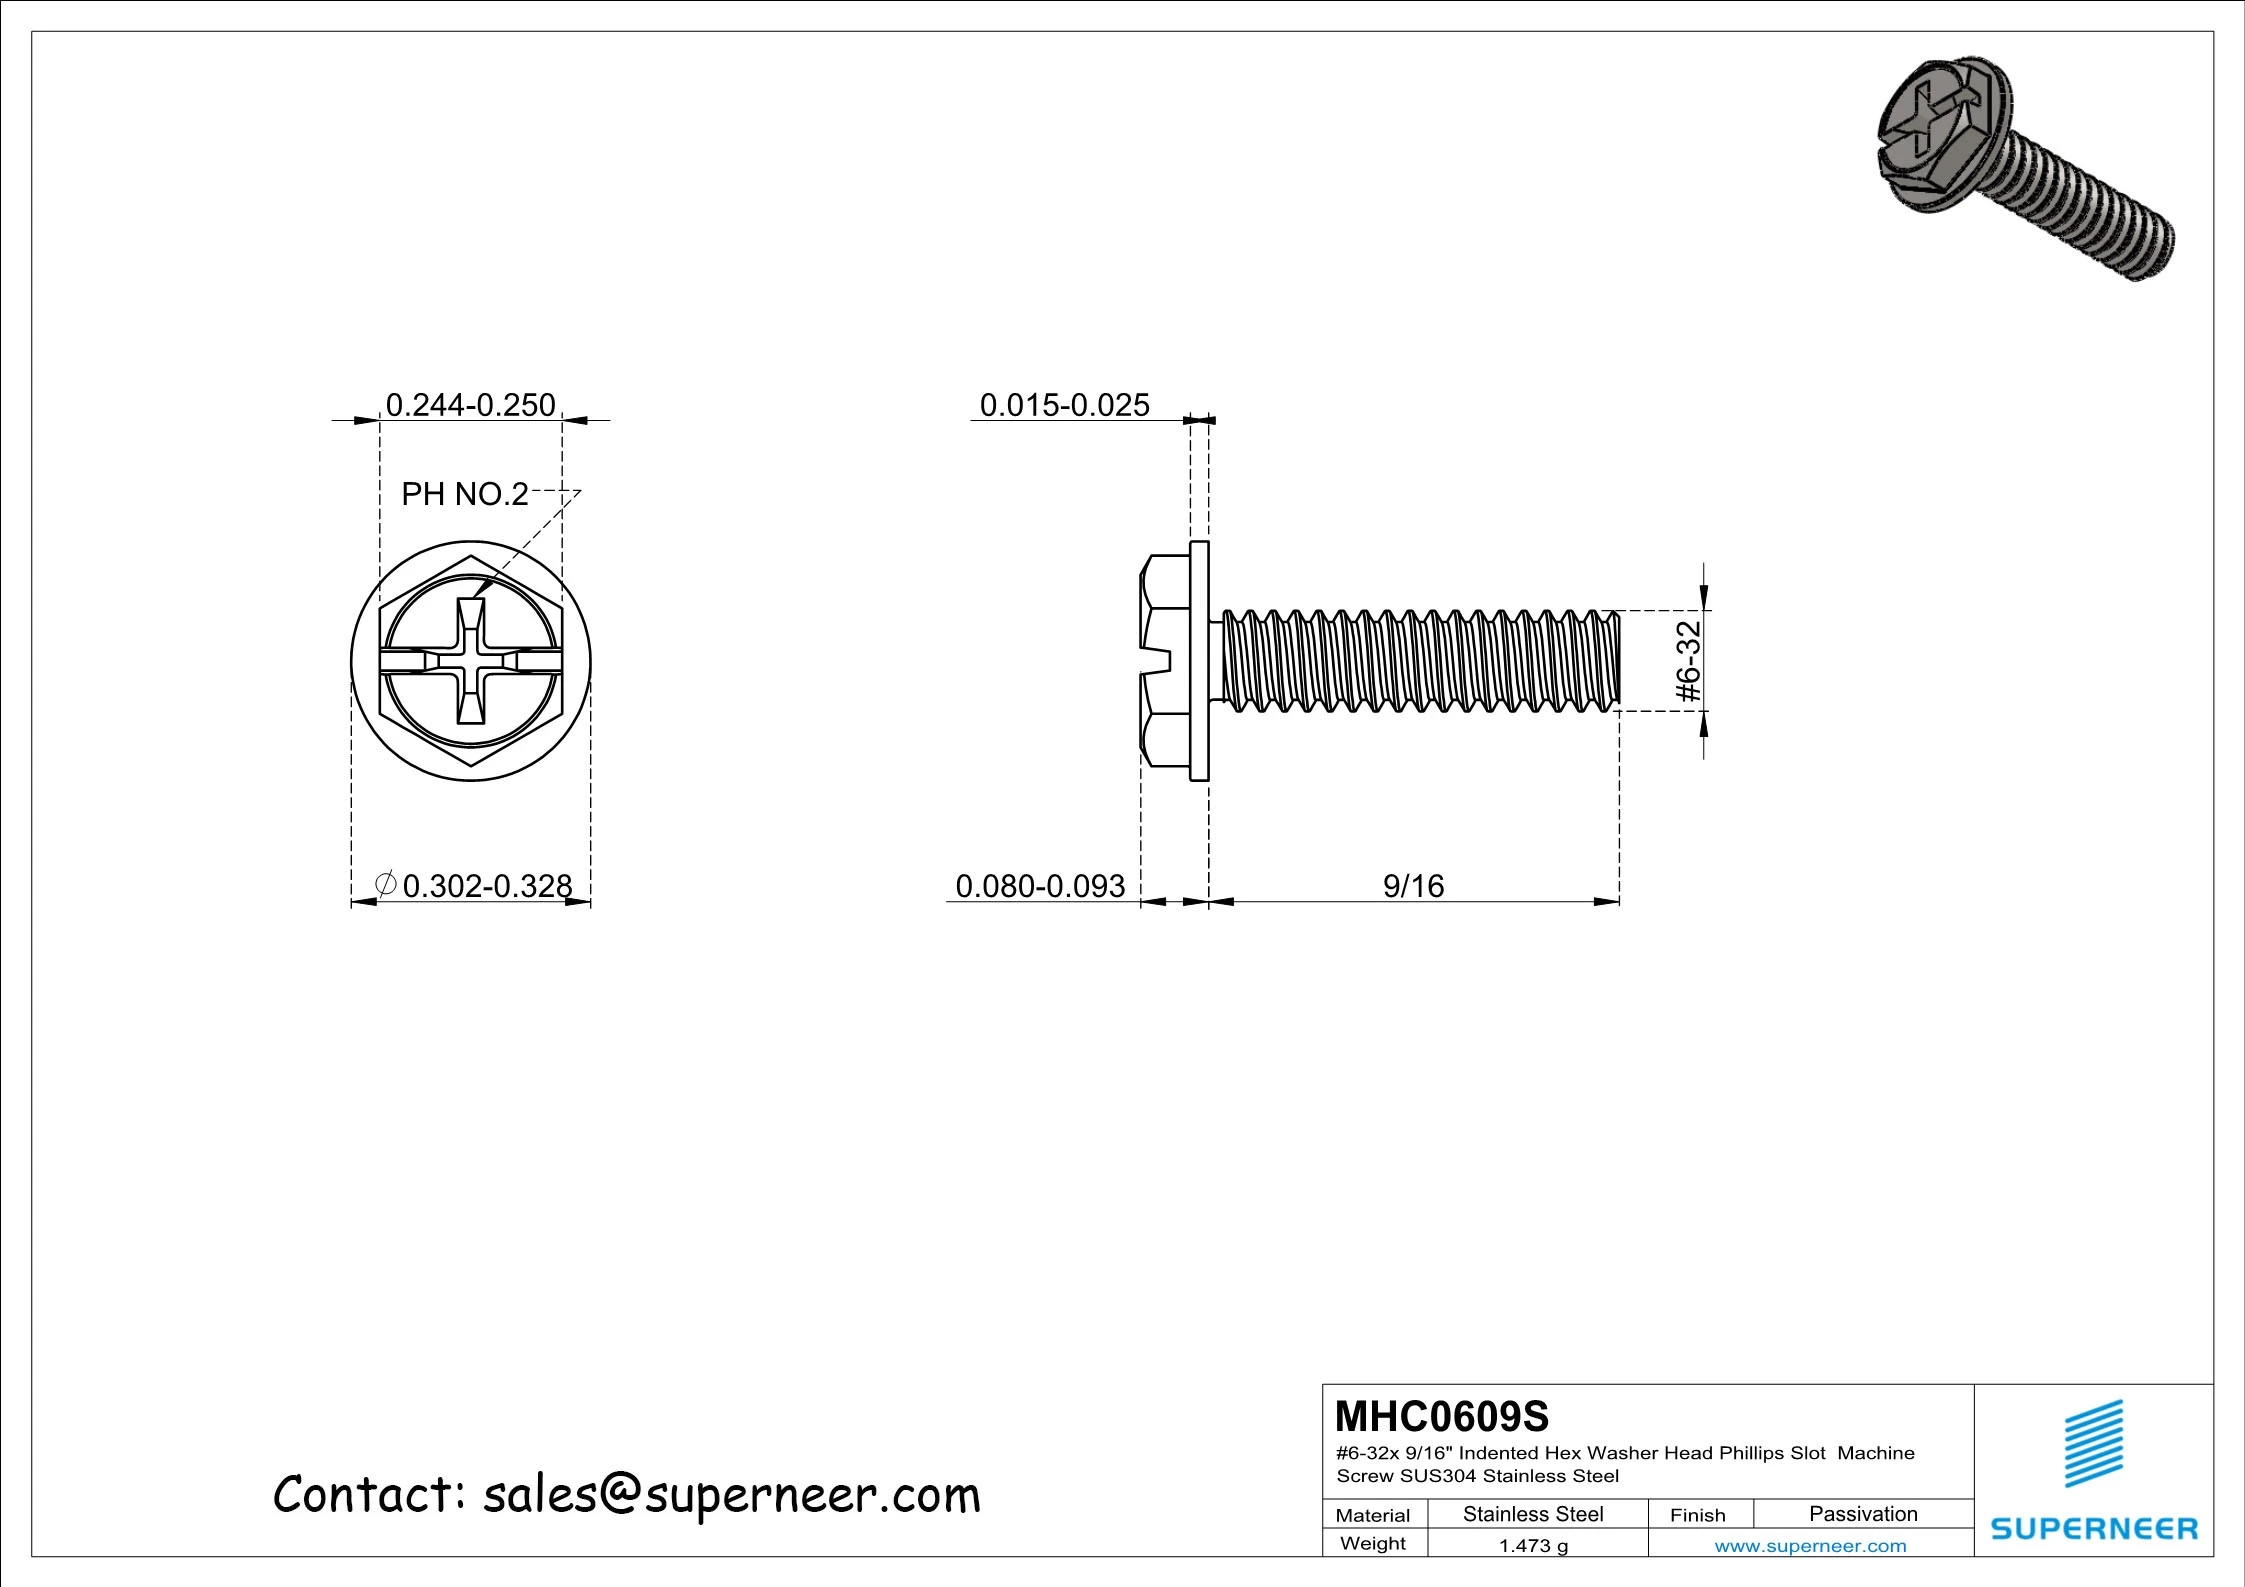 6-32 x 9/16“ Indented Hex Washer Head Phillips Slot Machine Screw SUS304 Stainless Steel Inox